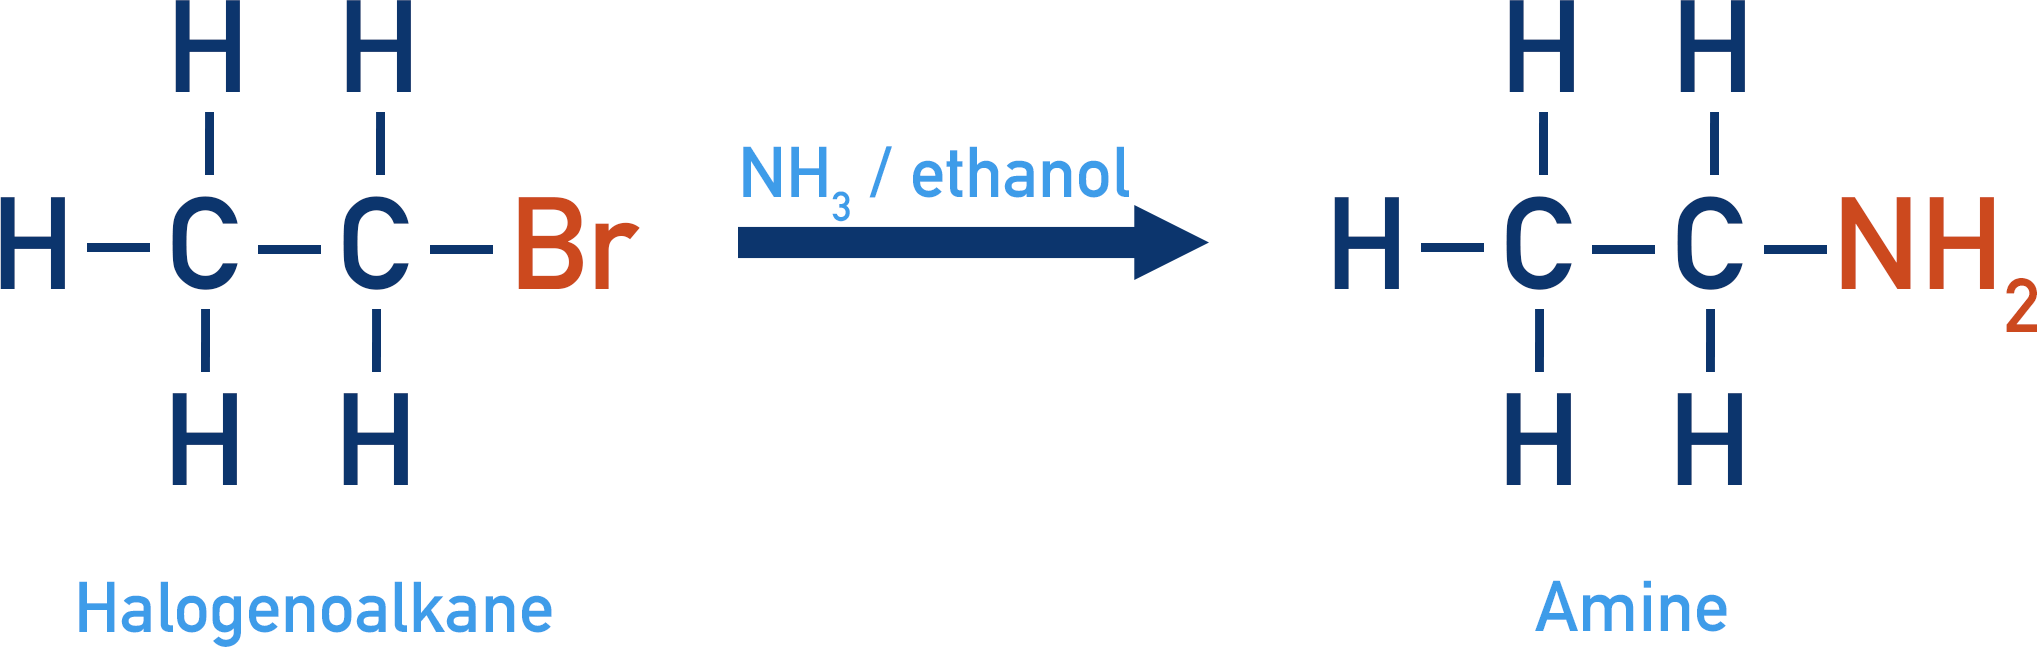 reaction between halogenoalkane bromoethane and ammonia to form amine